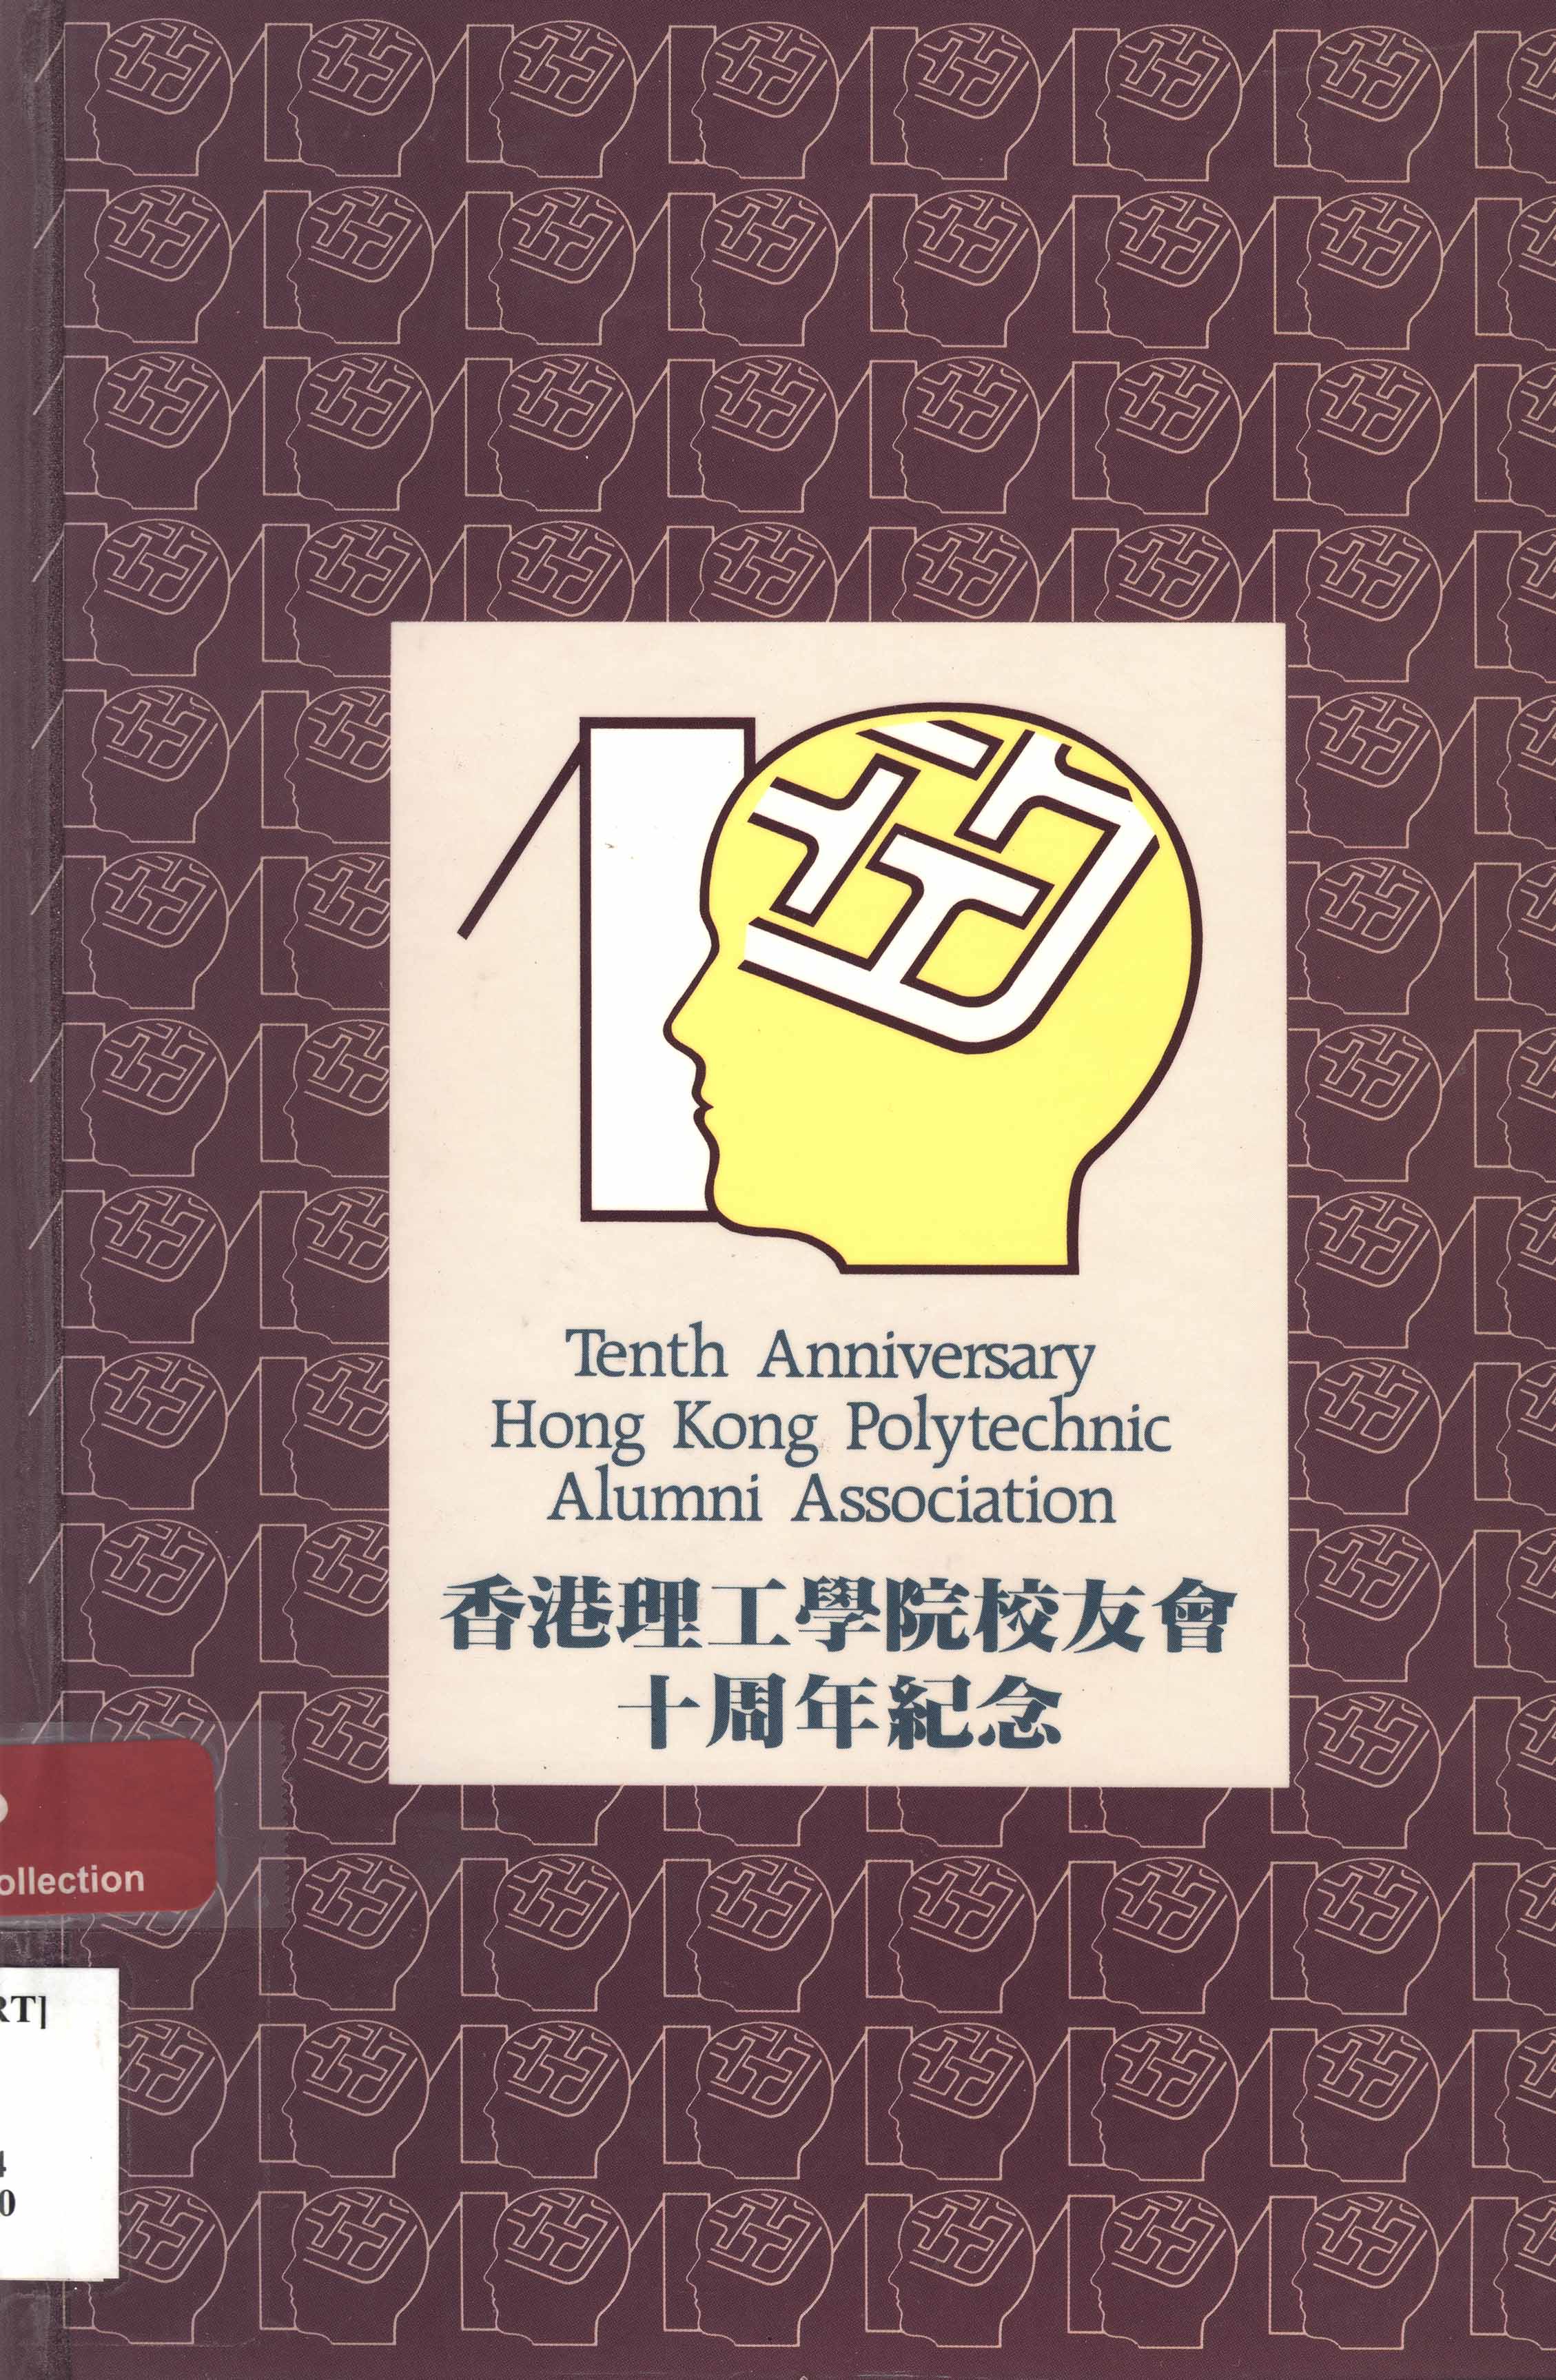 Tenth anniversary Hong Kong Polytechnic Alumni Association